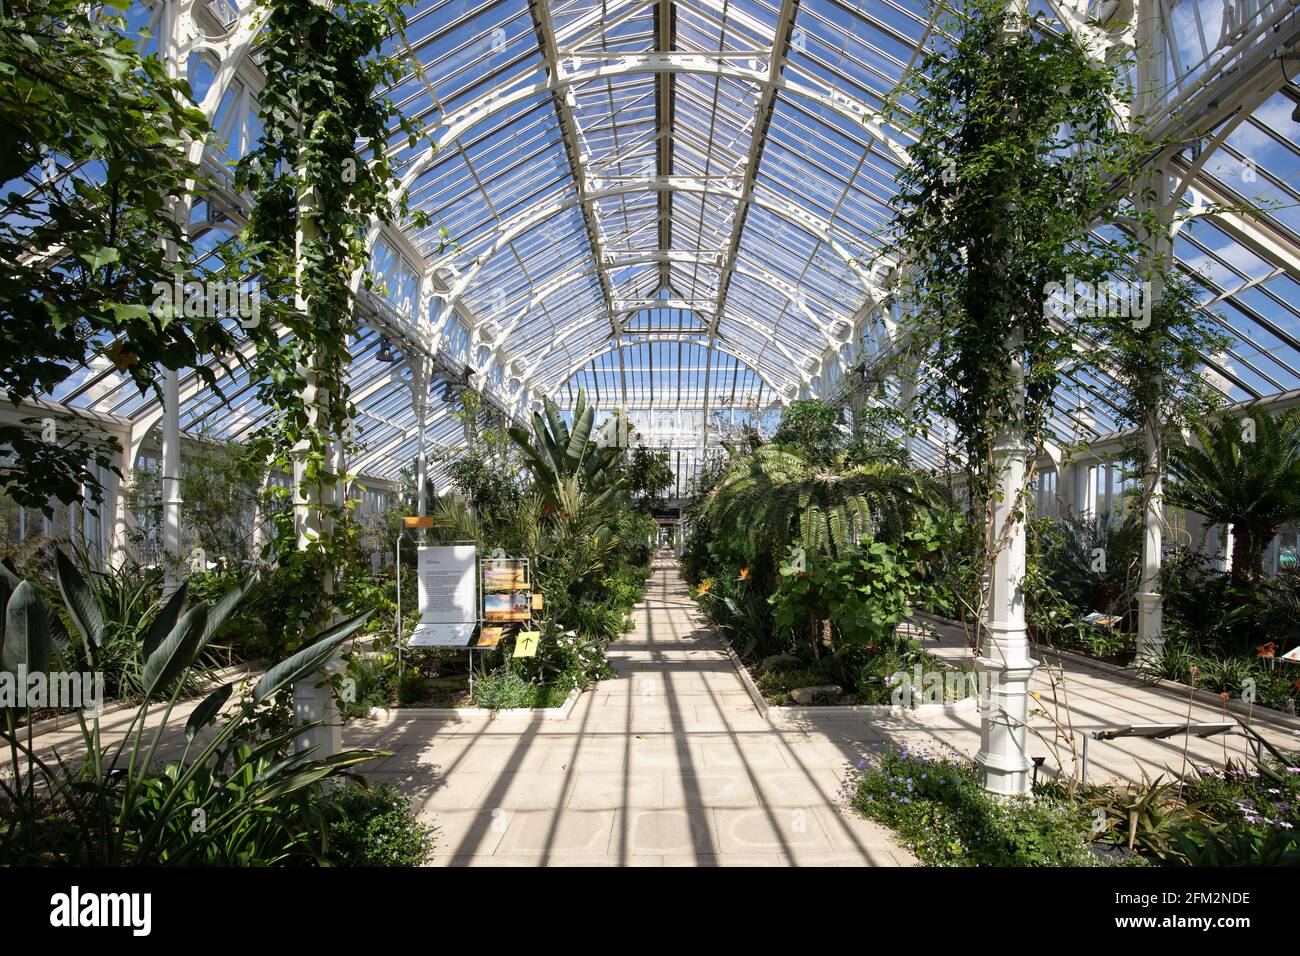 The Temperate House, Kew Royal Botanic Gardens, London, Uk Stock Photo